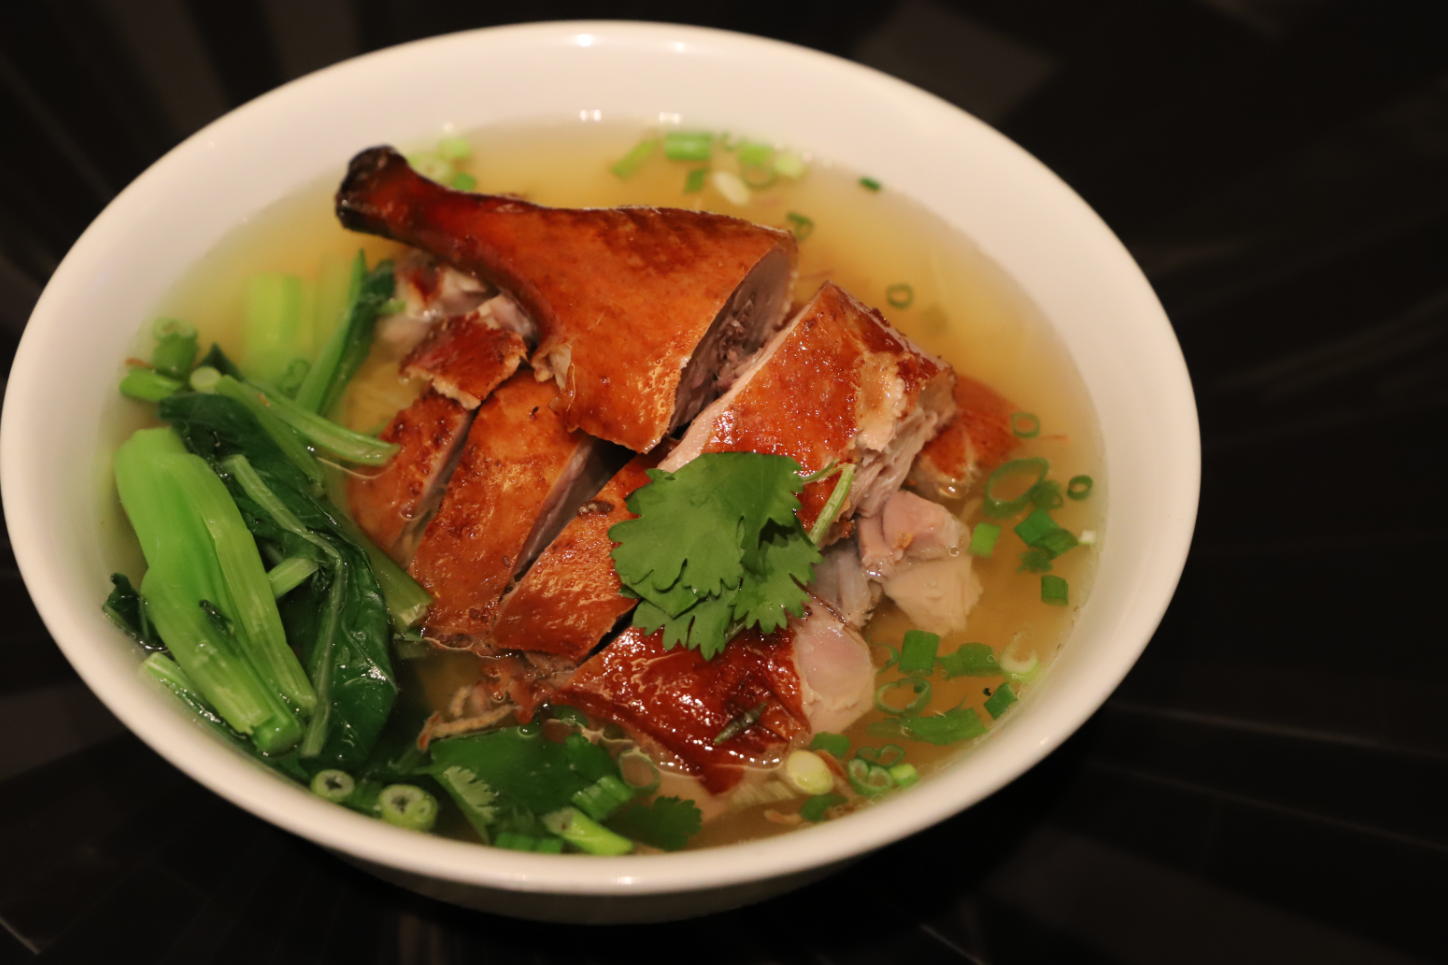 Jubao pork soup